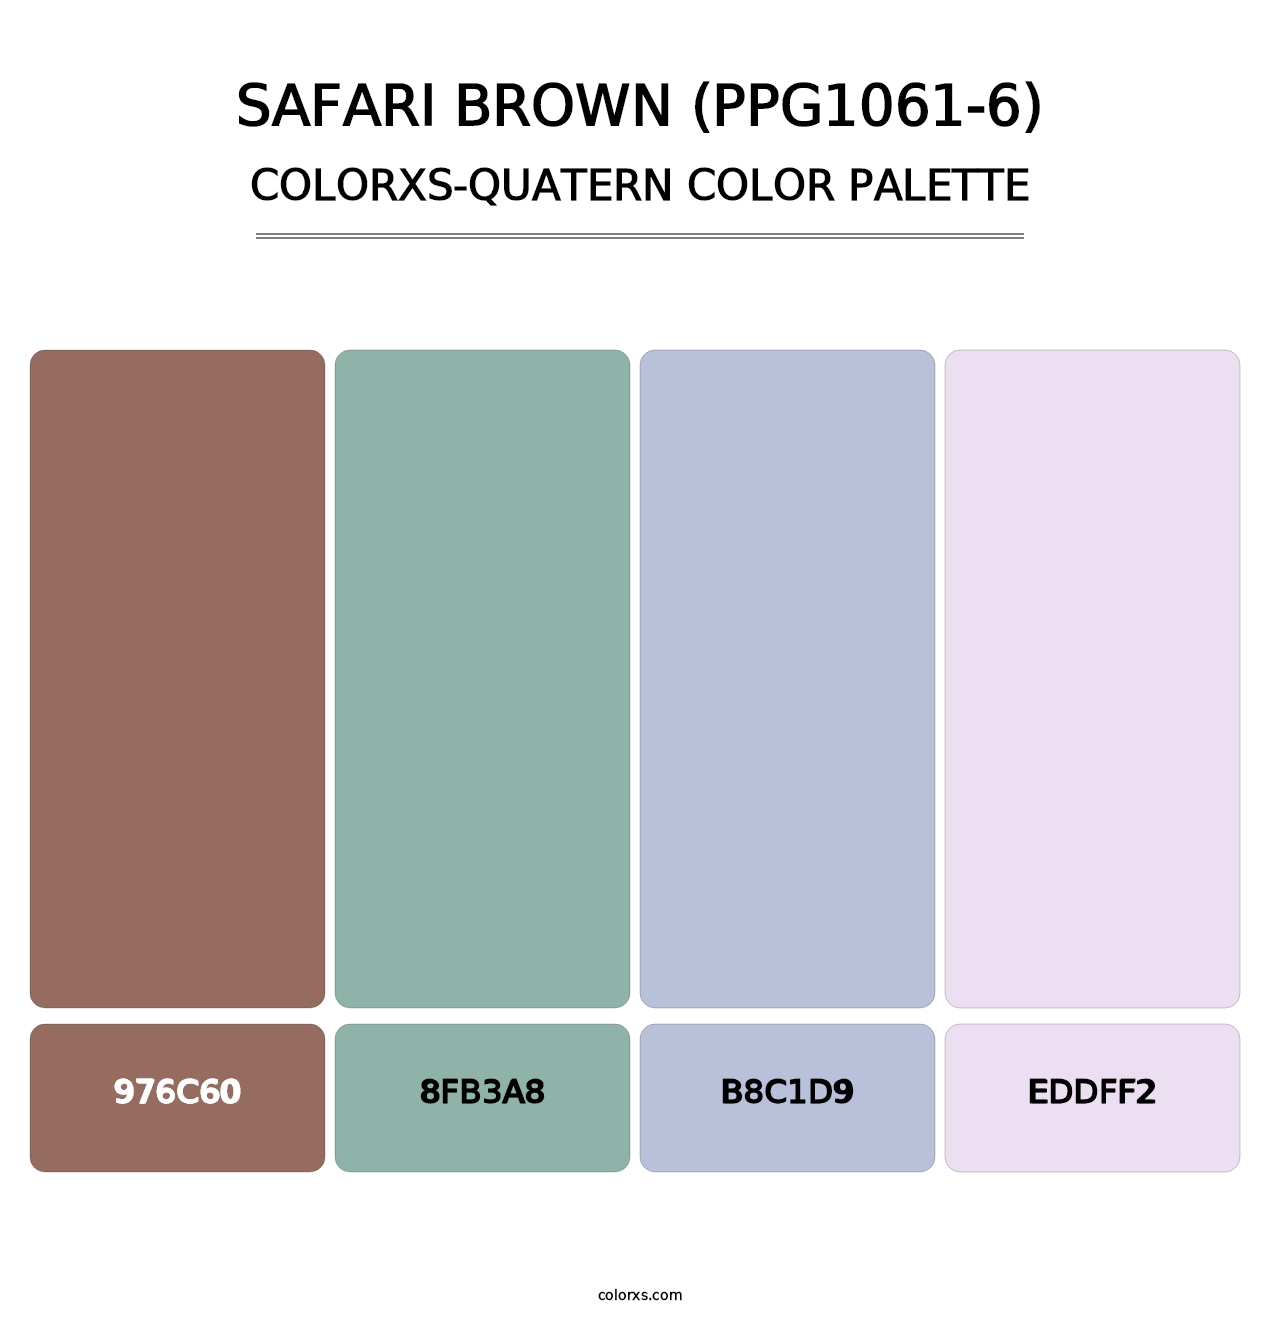 Safari Brown (PPG1061-6) - Colorxs Quatern Palette